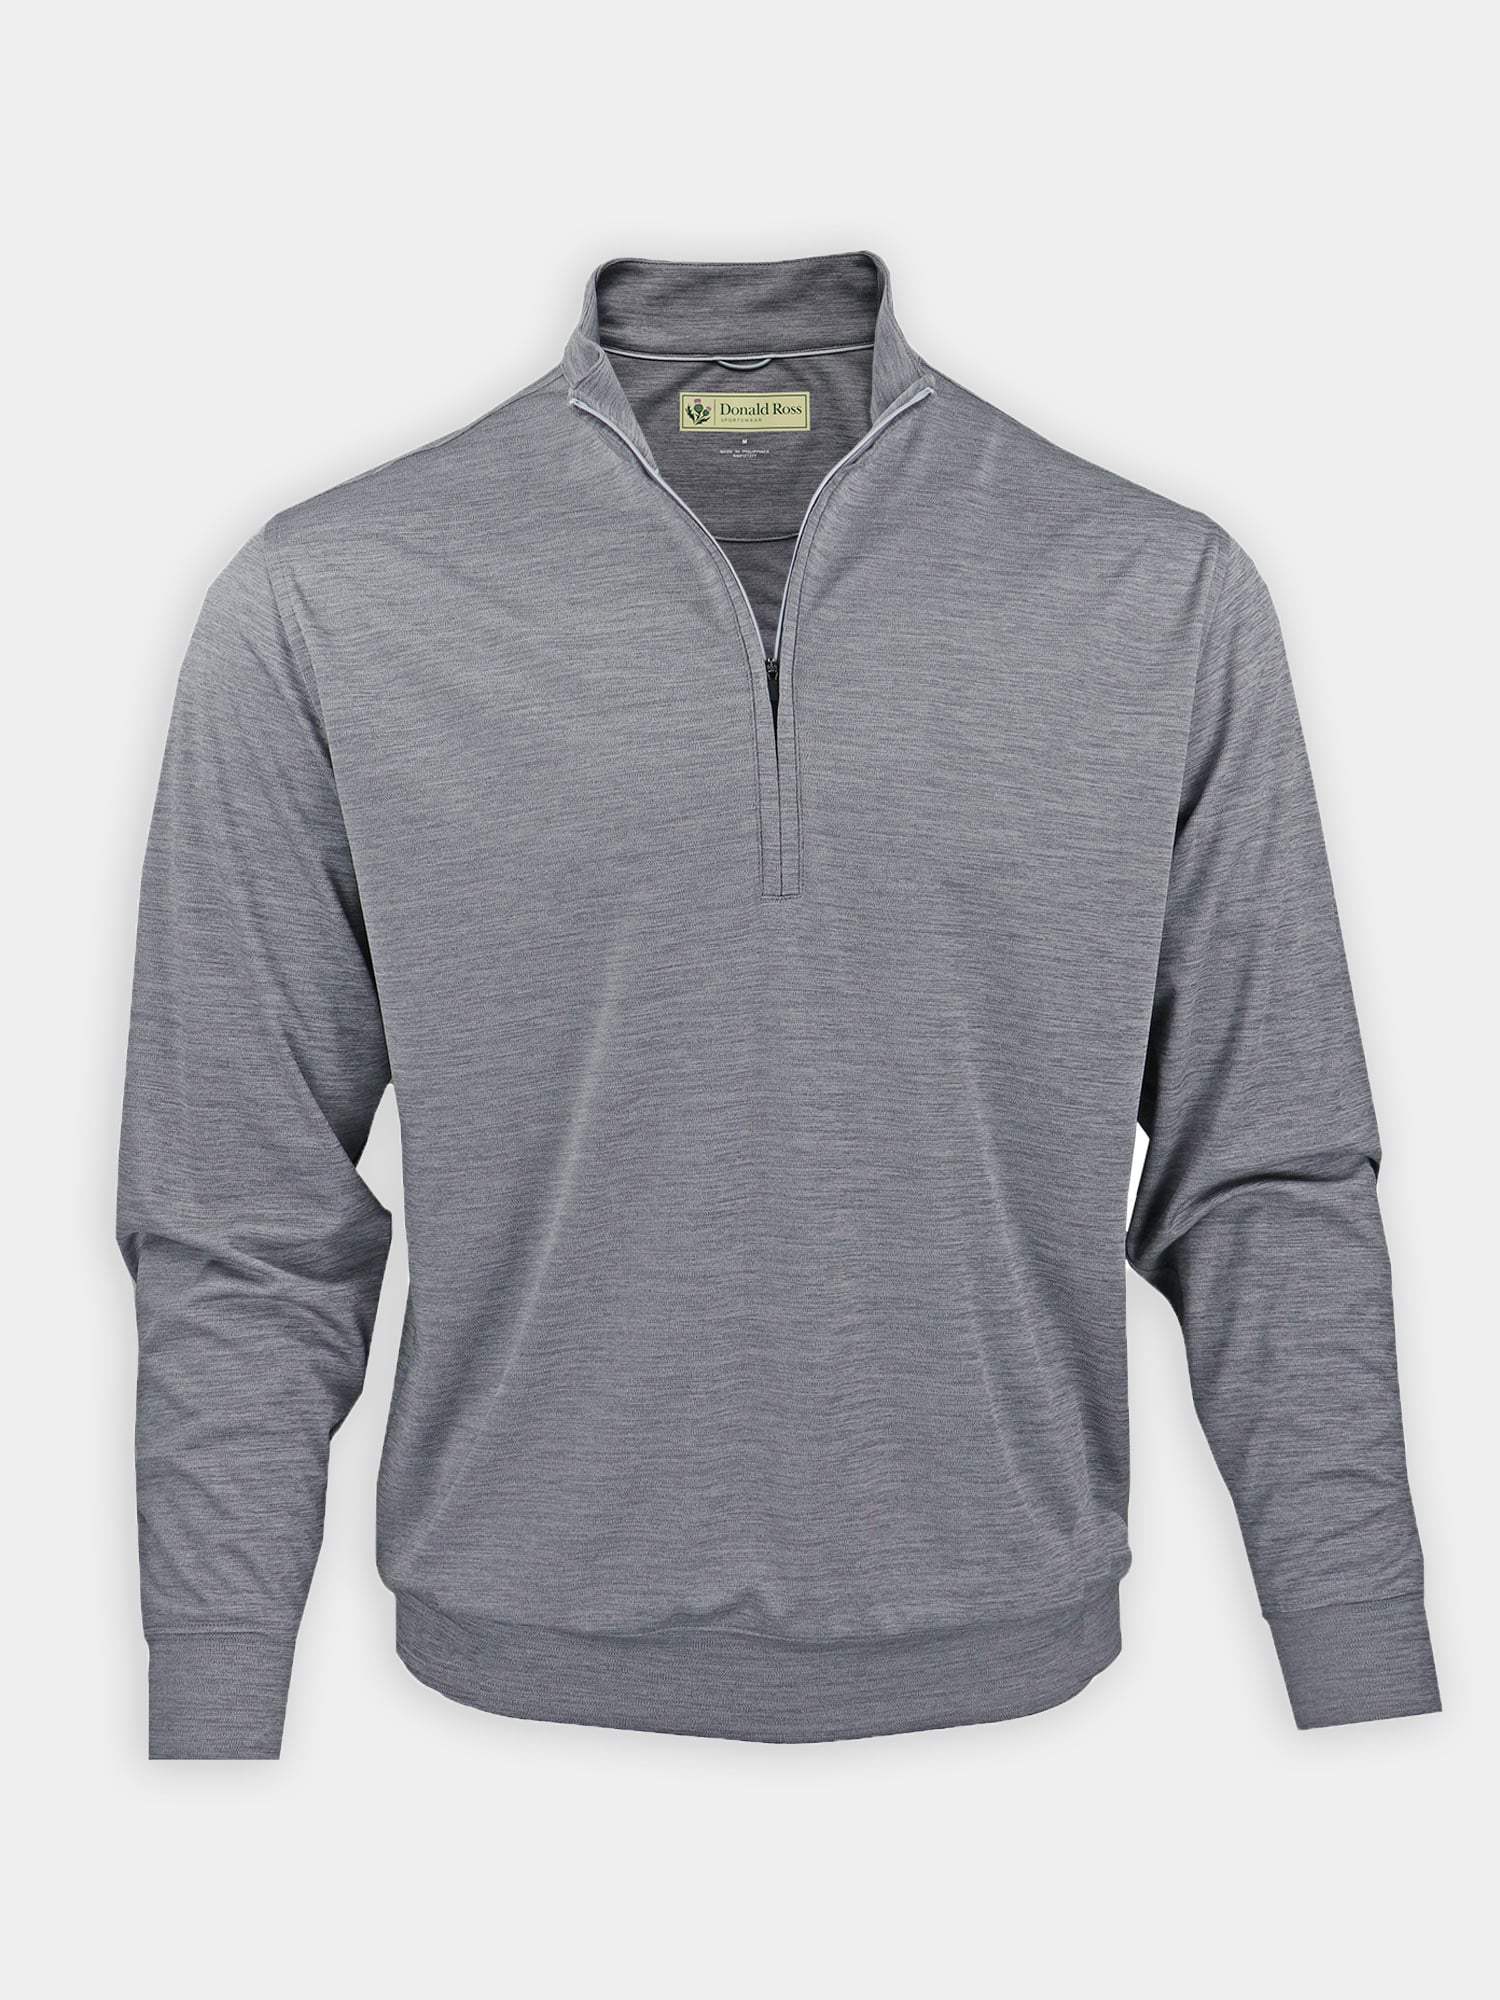 Fairway Pullover | Half Zip Golf Pullover | Grey | Donald Ross Sportswear